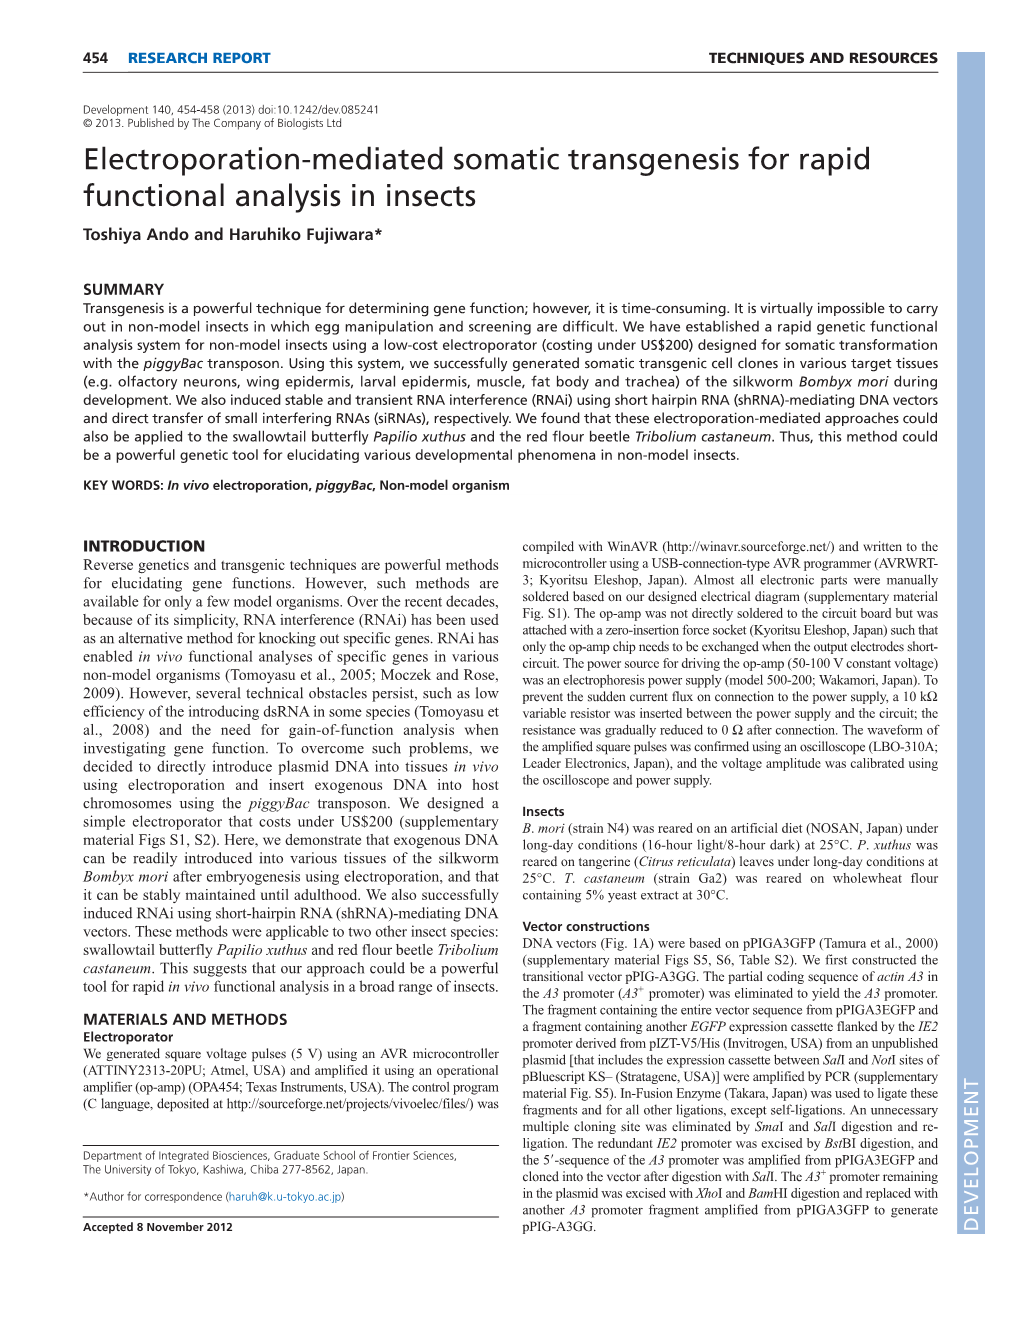 Electroporation-Mediated Somatic Transgenesis for Rapid Functional Analysis in Insects Toshiya Ando and Haruhiko Fujiwara*